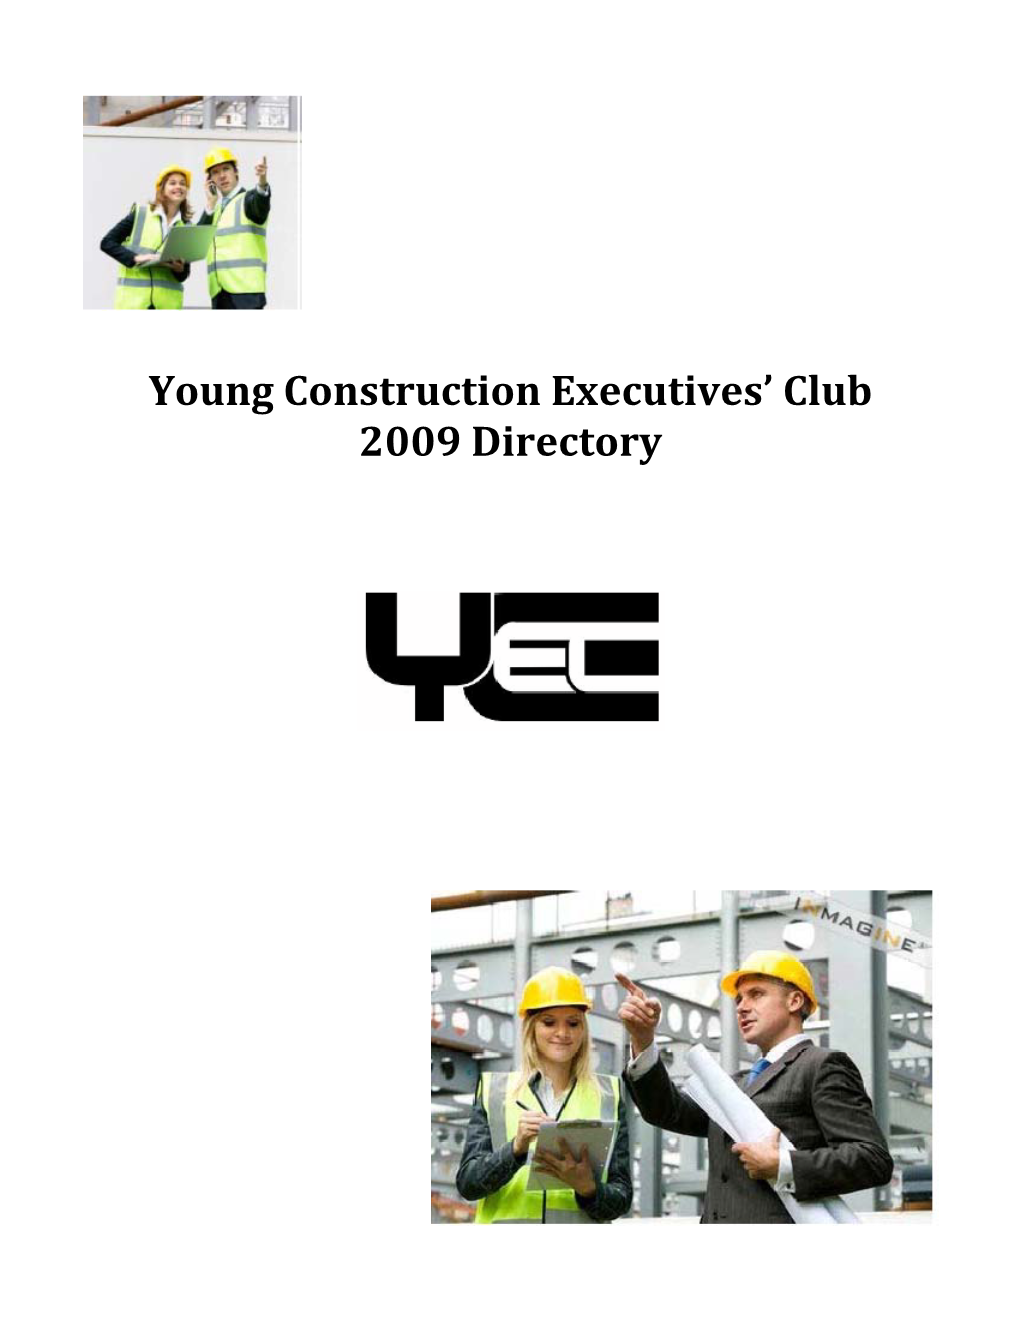 Young Construction Executives' Club 2009 Directory